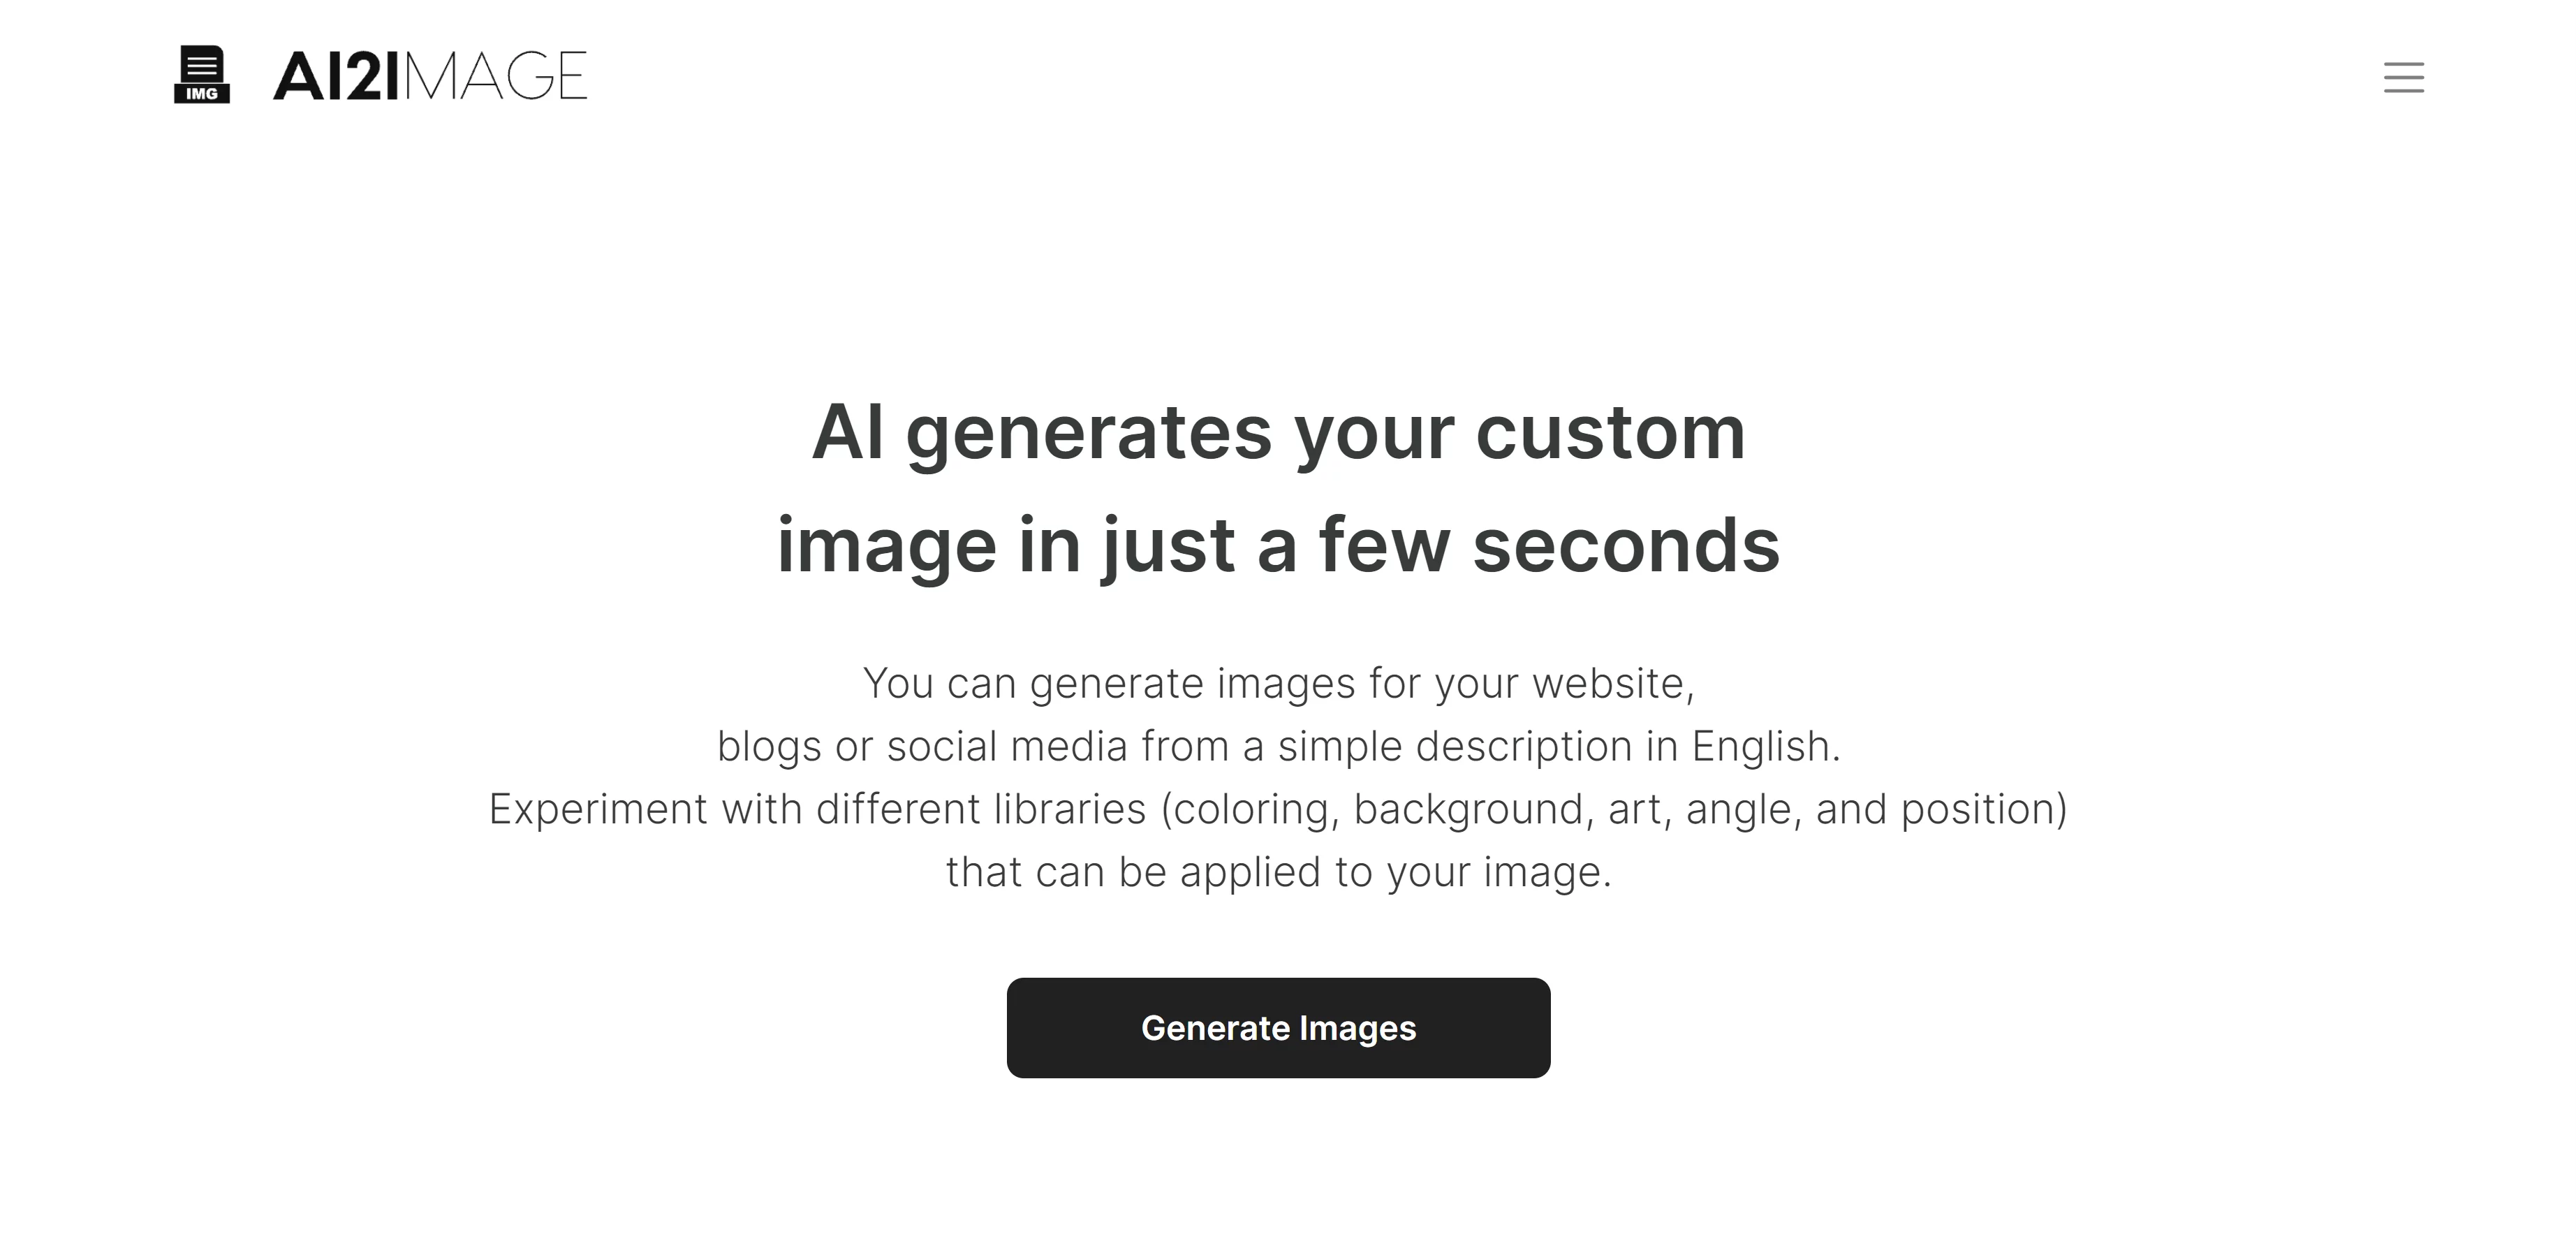  AI creates custom images from English